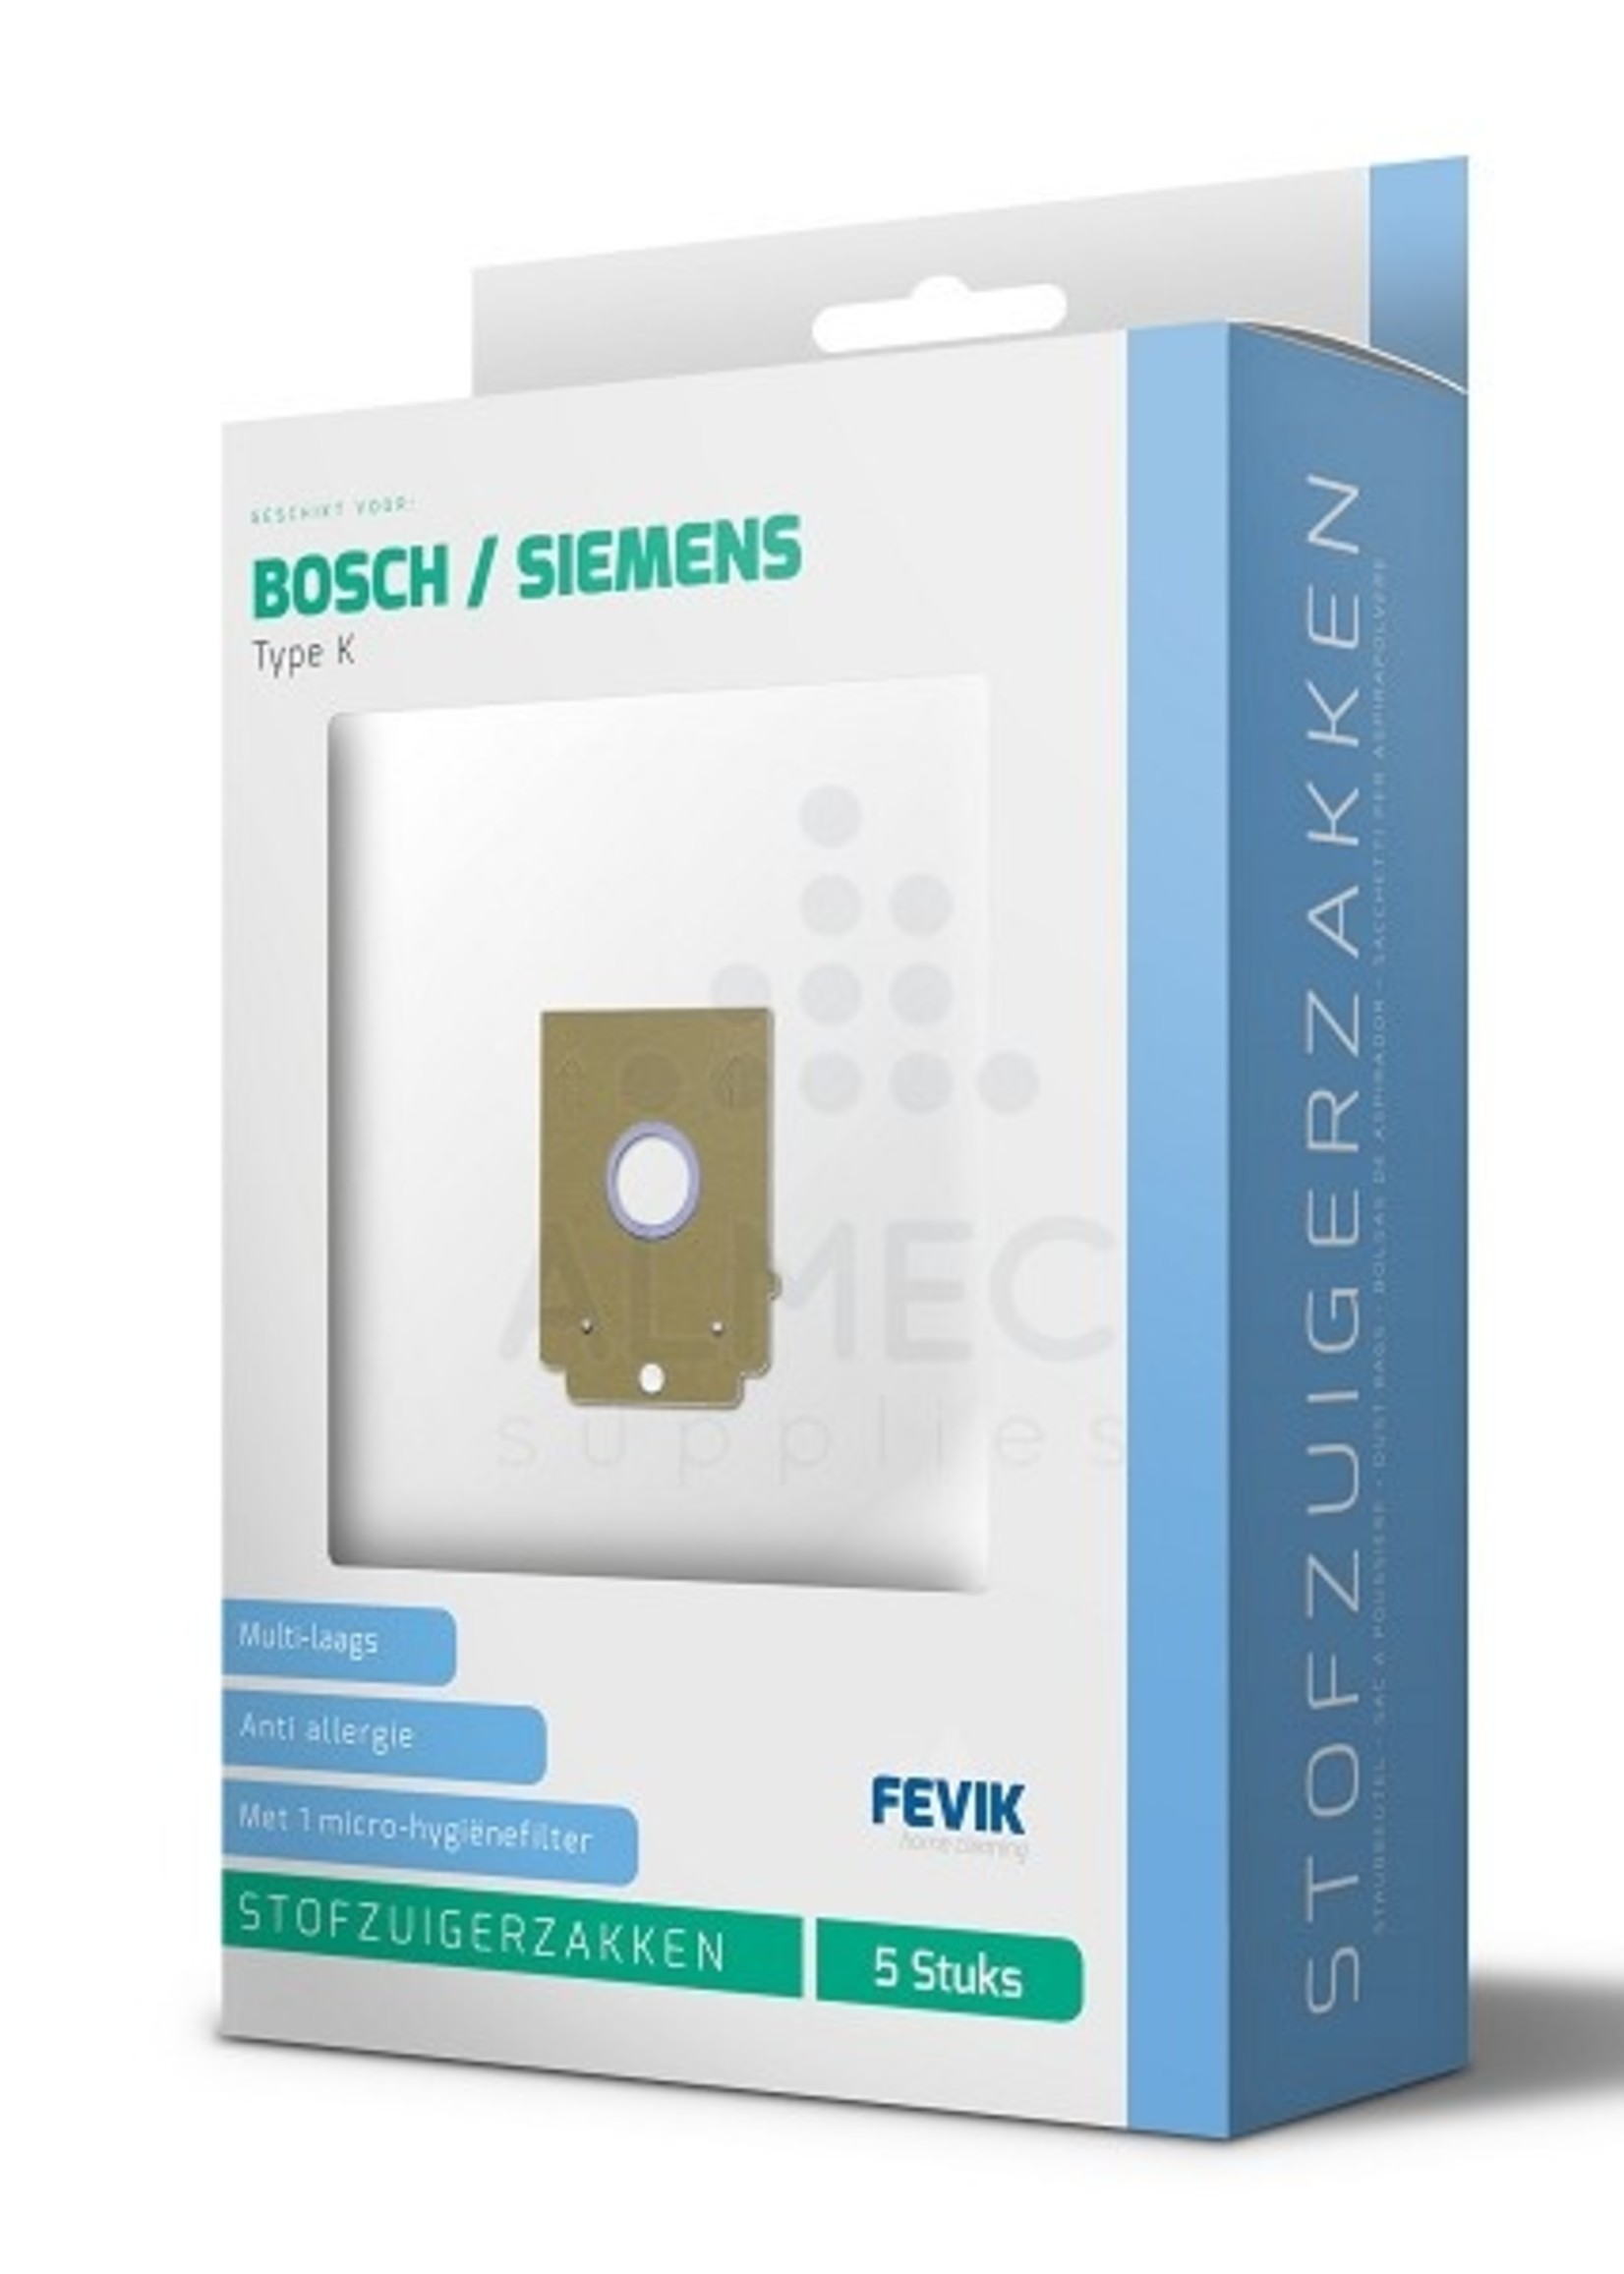 Fevik Stofzuigerzakken Bosch / Siemens Type K pak a 5 stuks